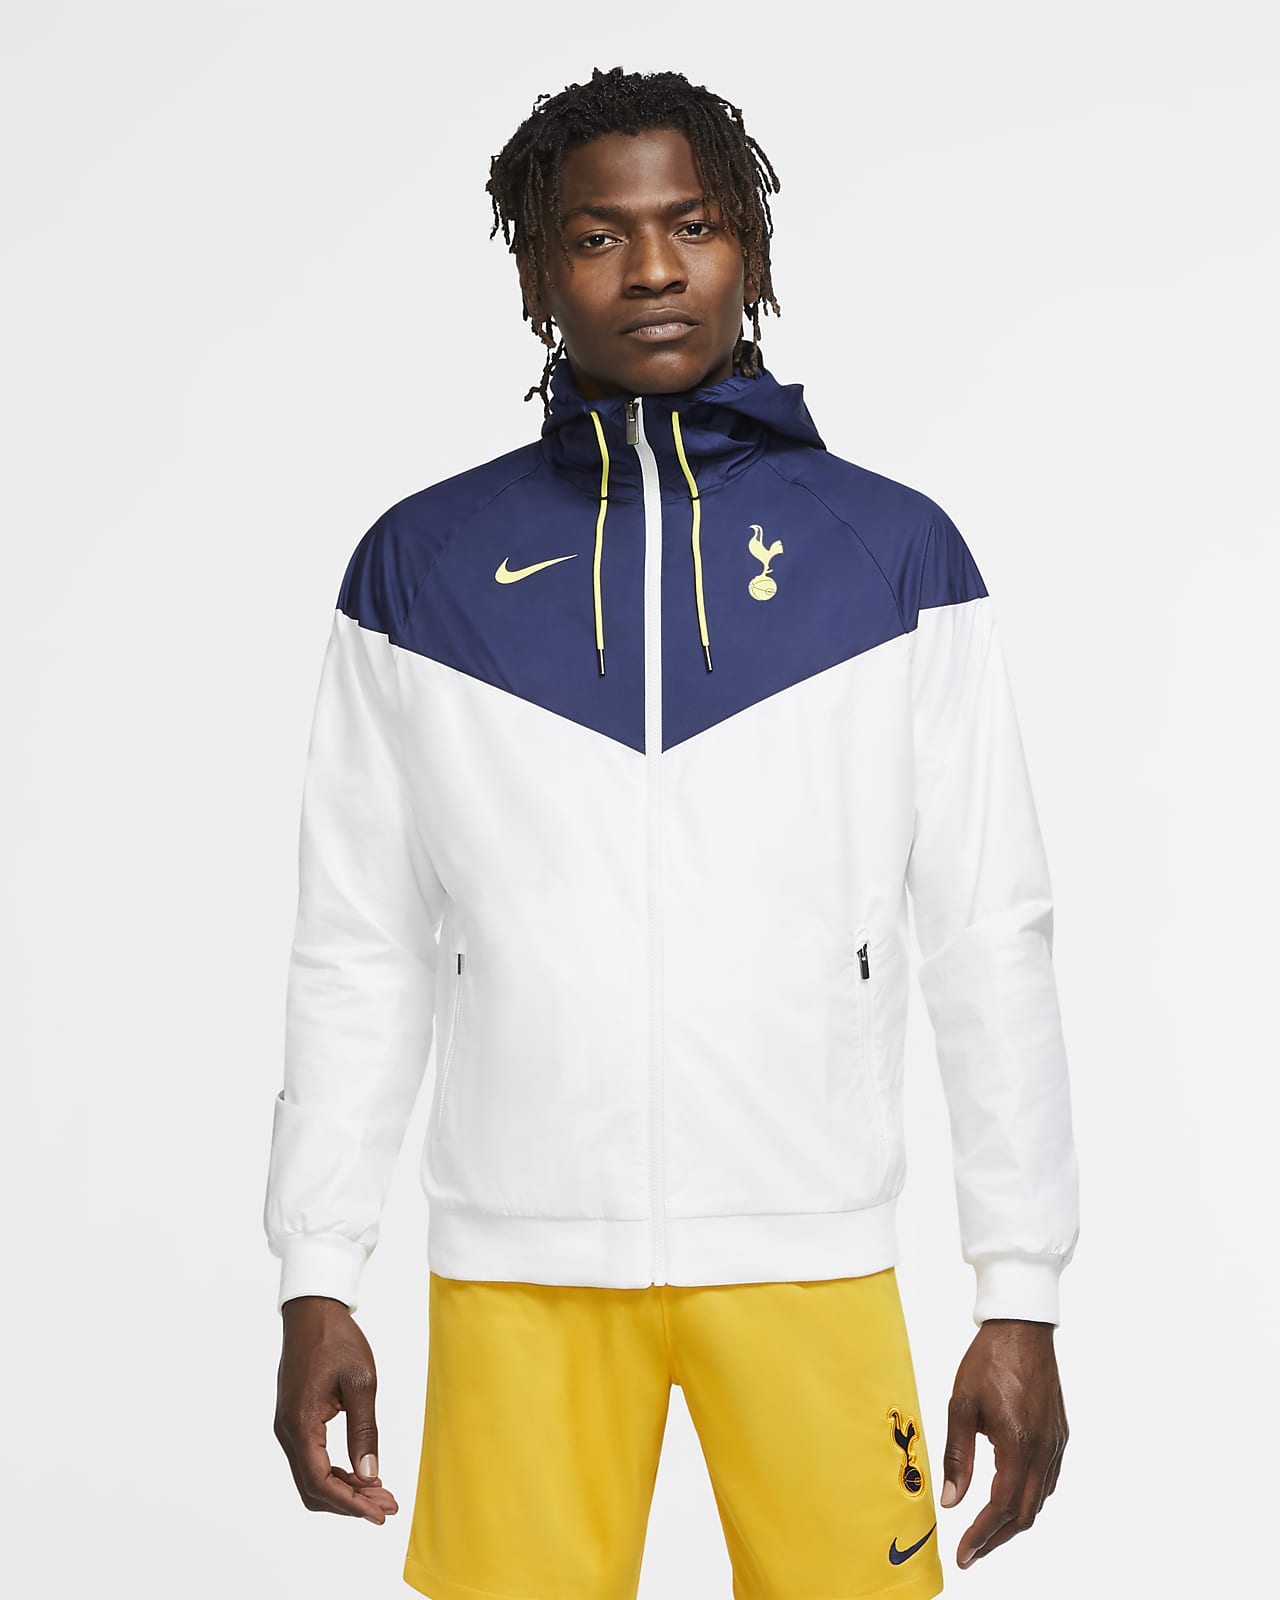 Mantenimiento inventar Interesante Tottenham Hotspur Windrunner Men's Woven Jacket. Nike.com